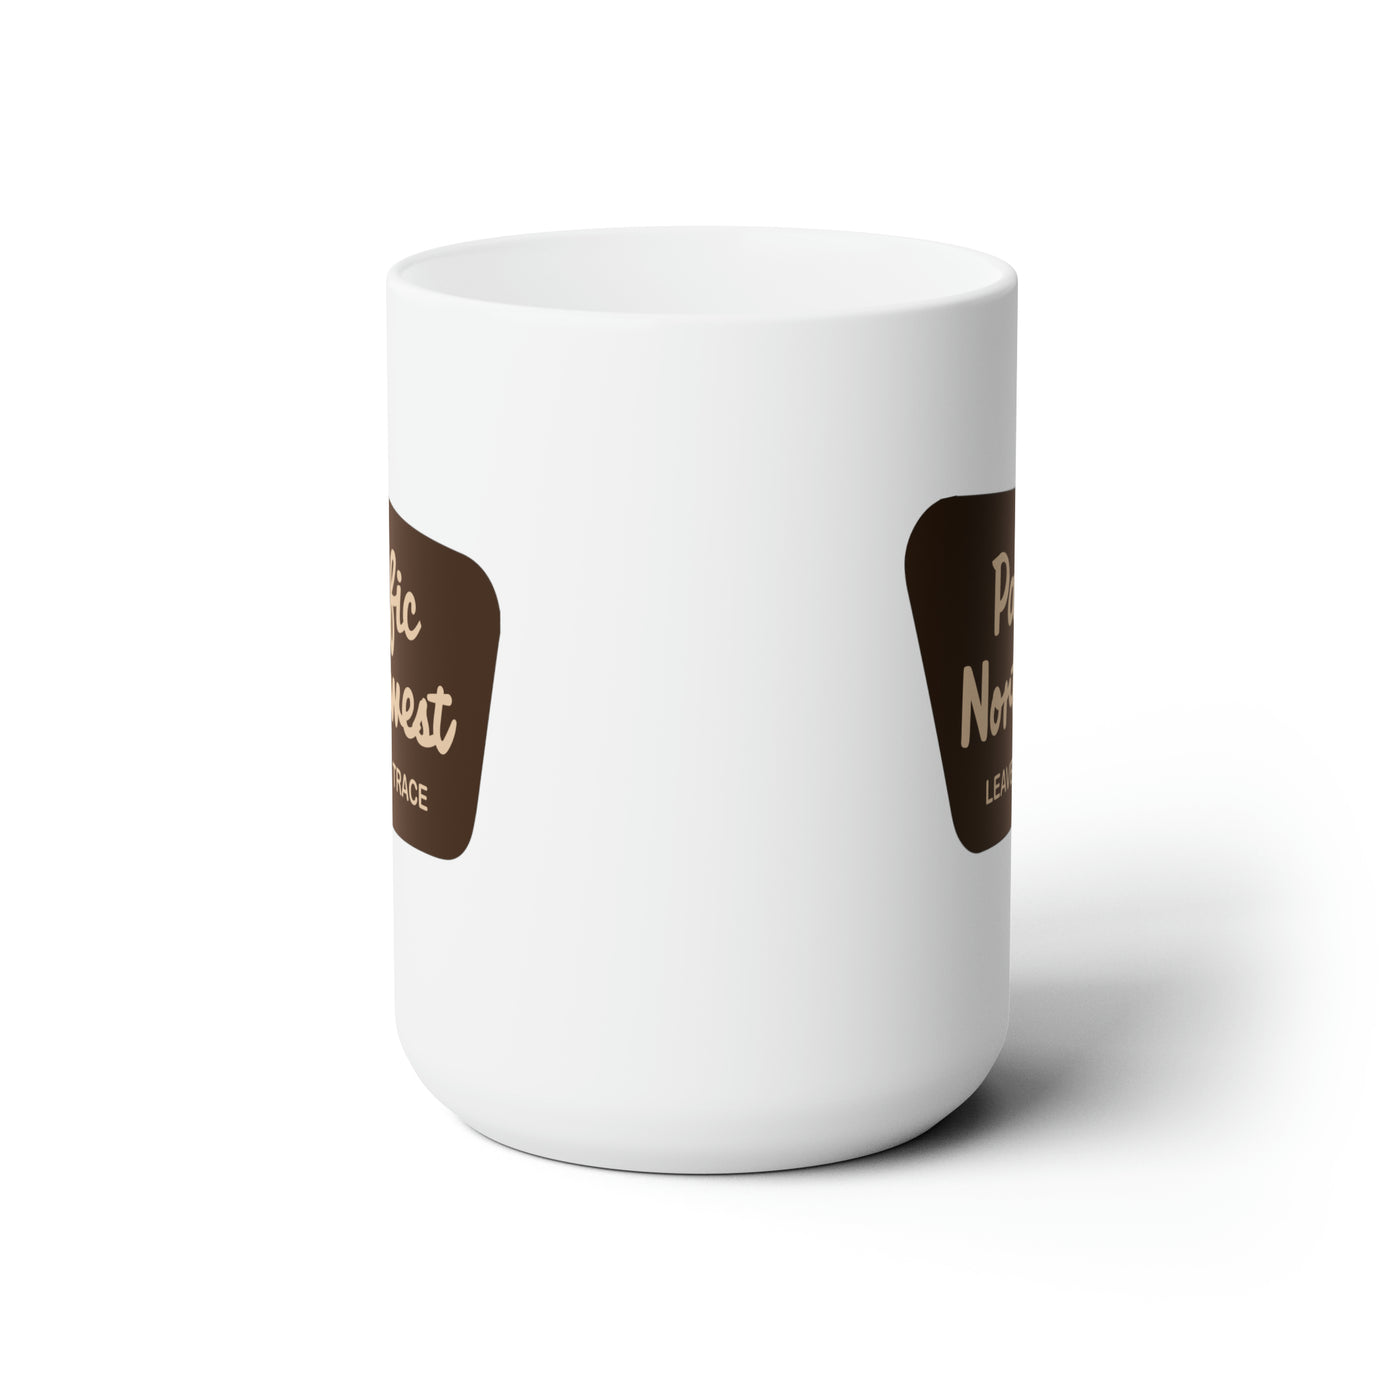 Pacific Northwest National Forest 15 oz Ceramic Mug